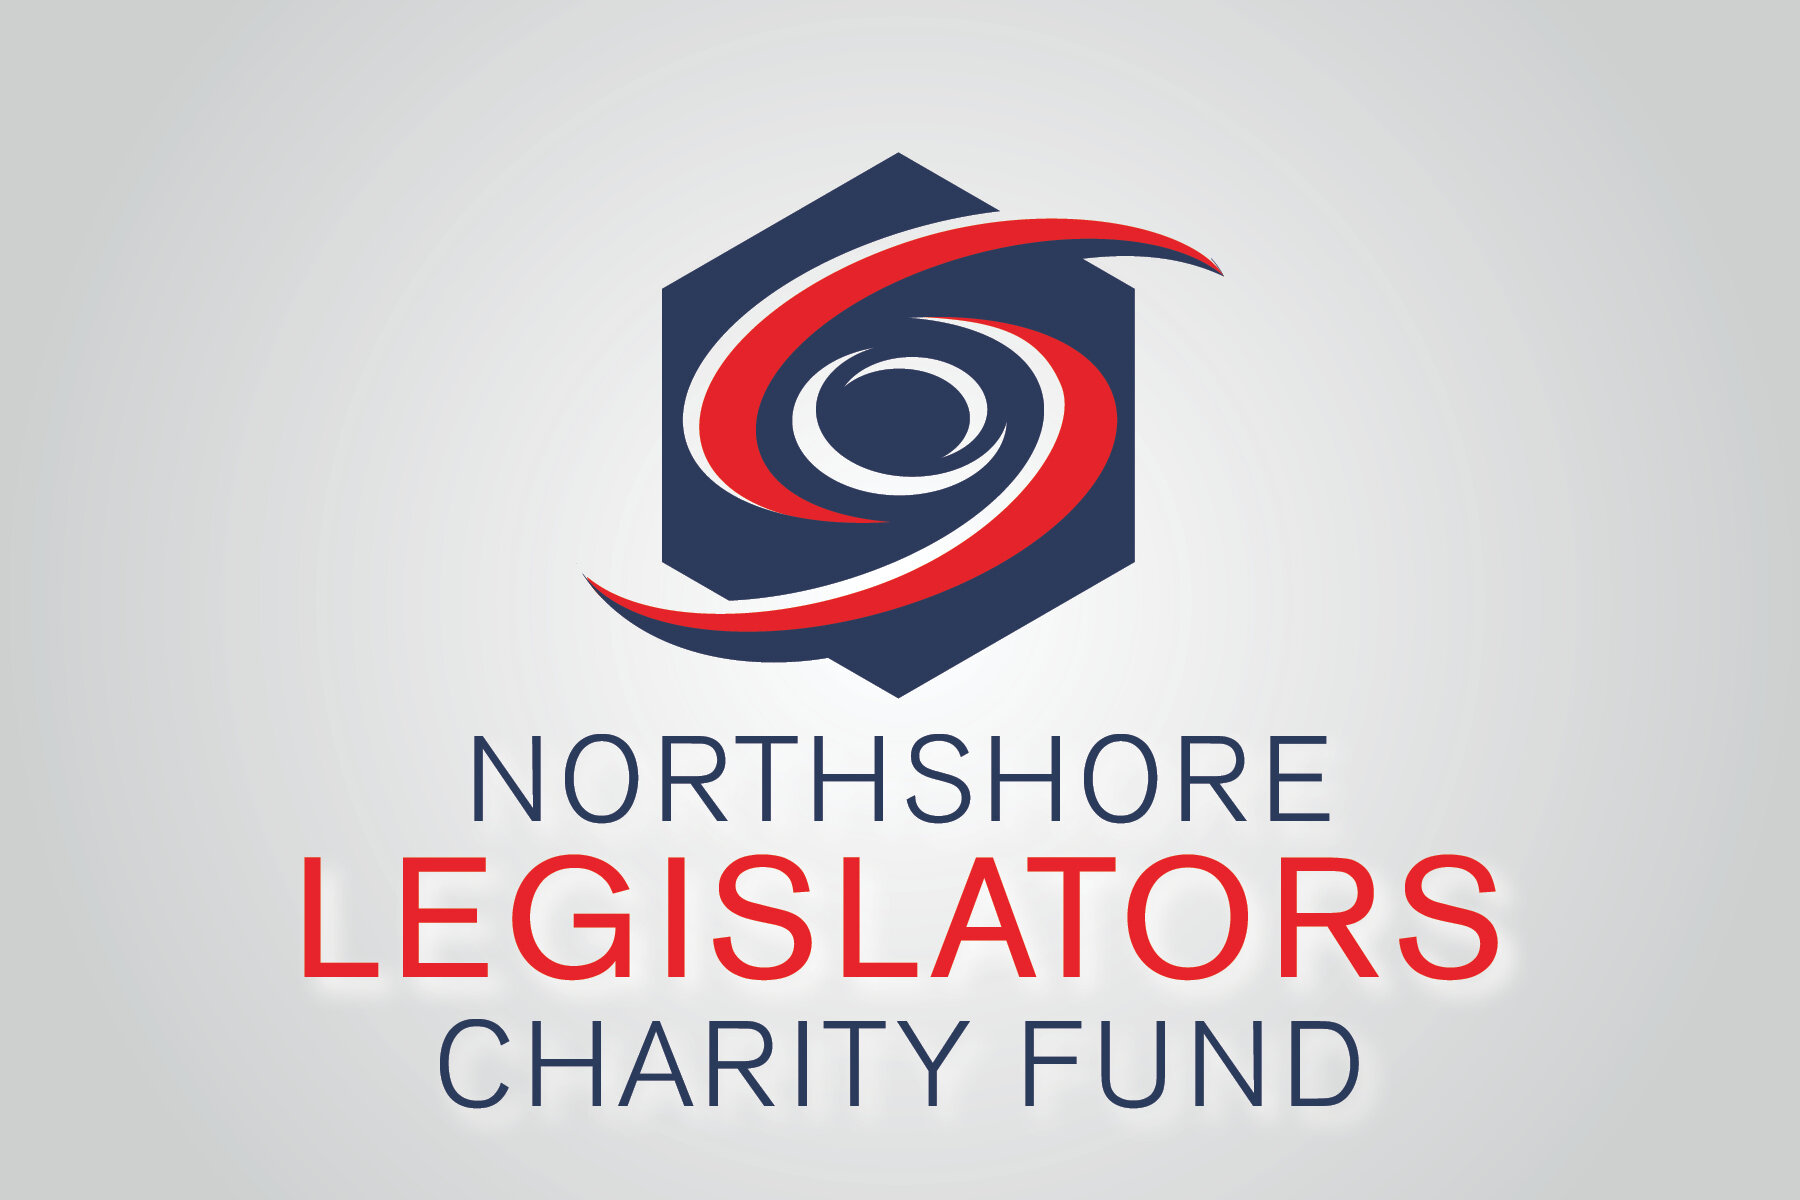 Northshore Legislators Charity Fund